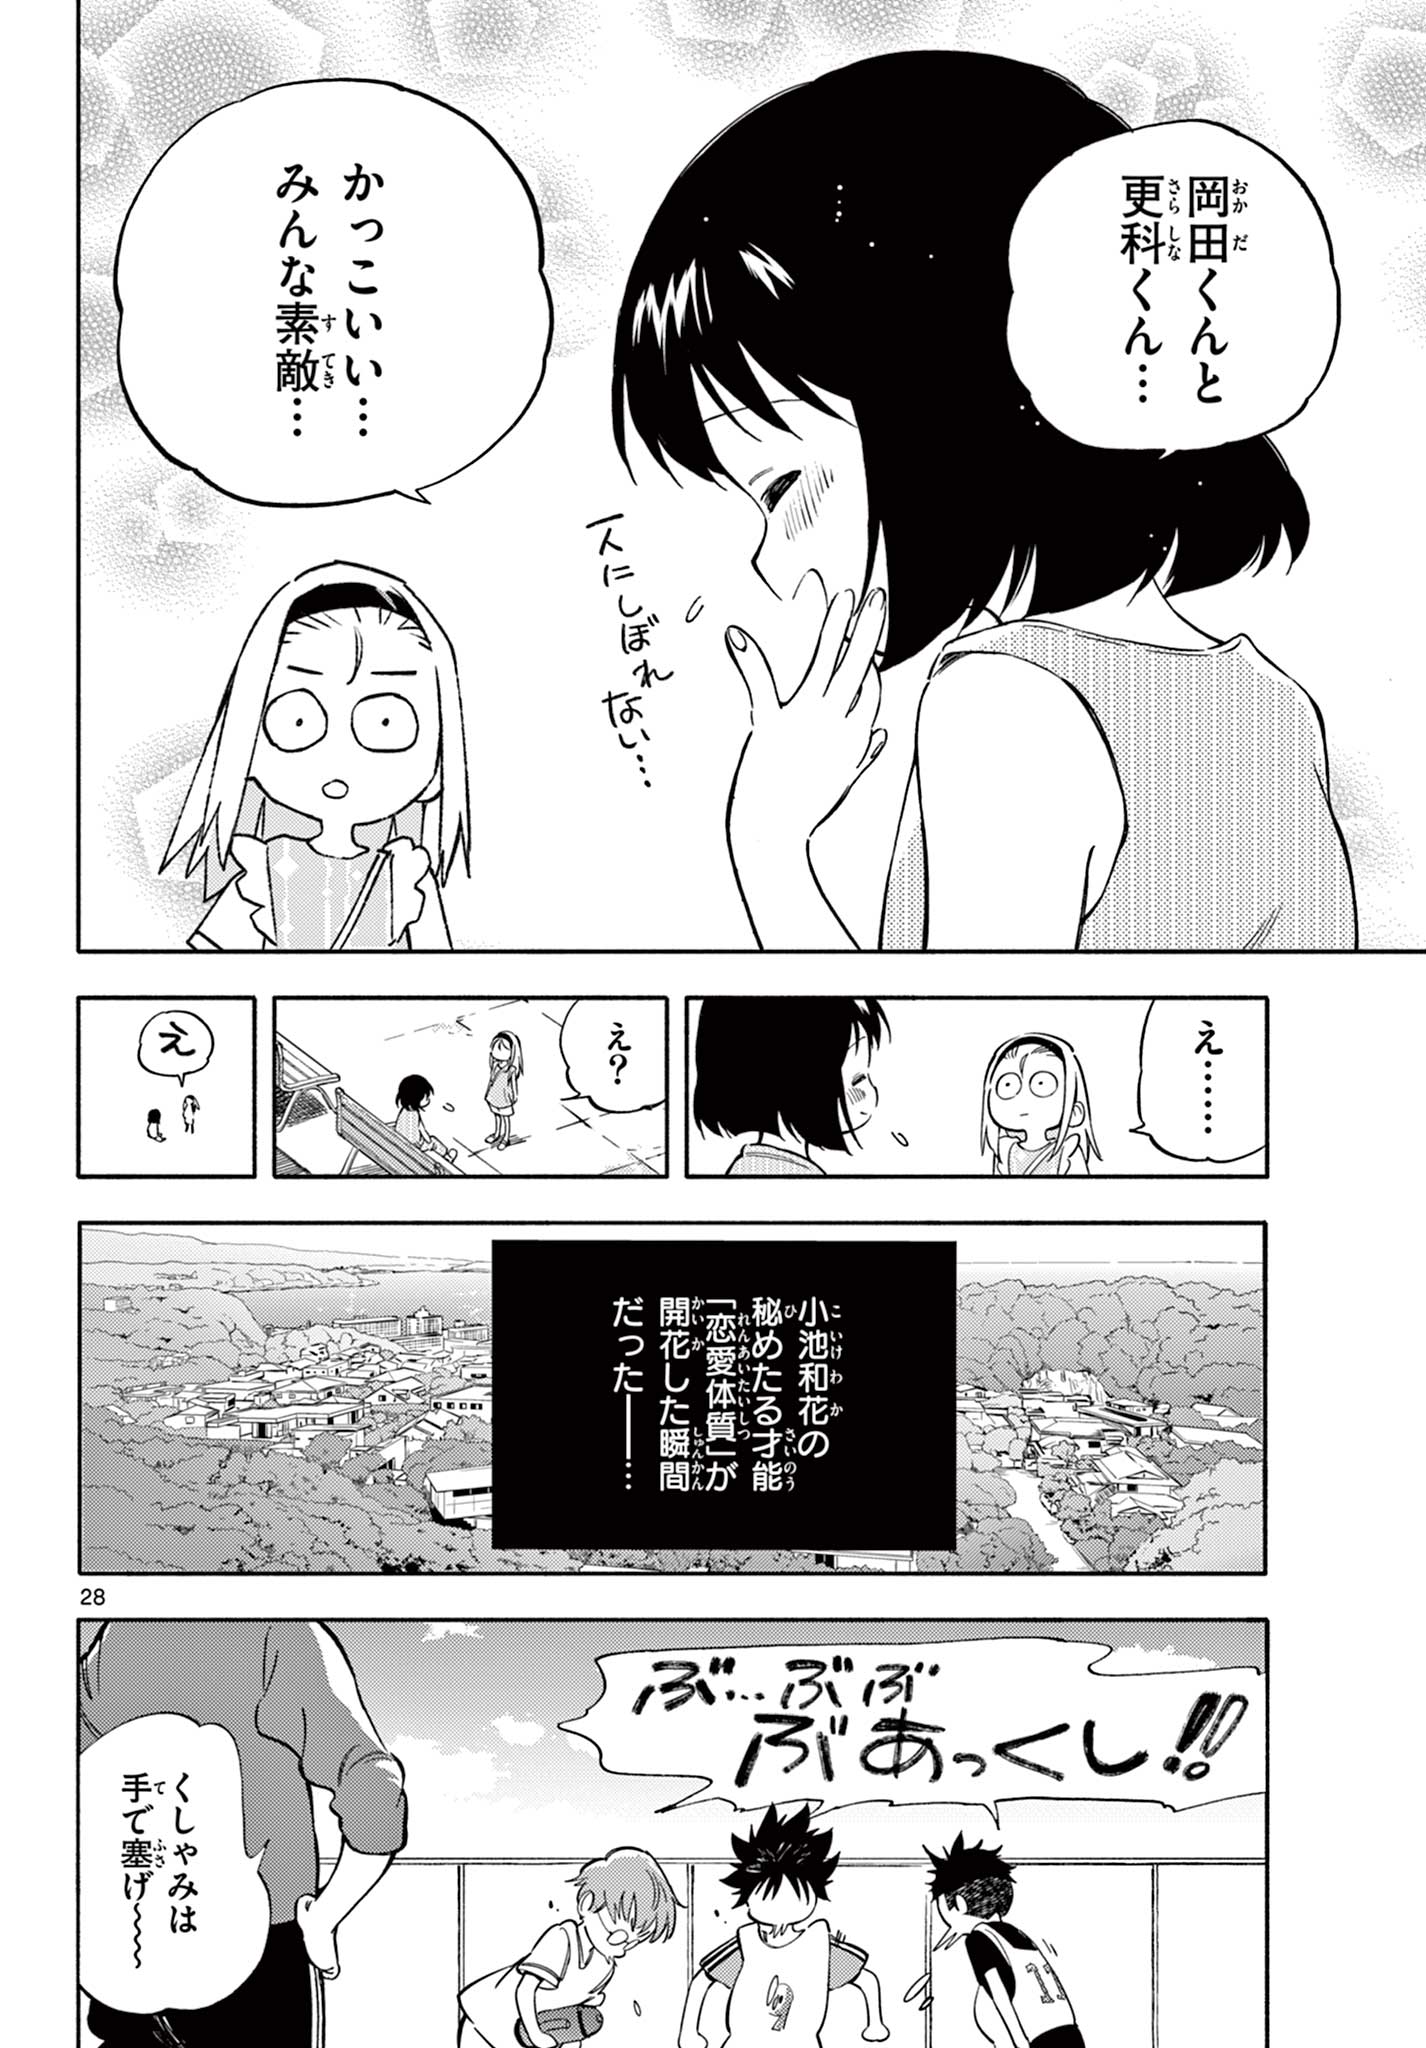 Nami no Shijima no Horizont - Chapter 11.2 - Page 14